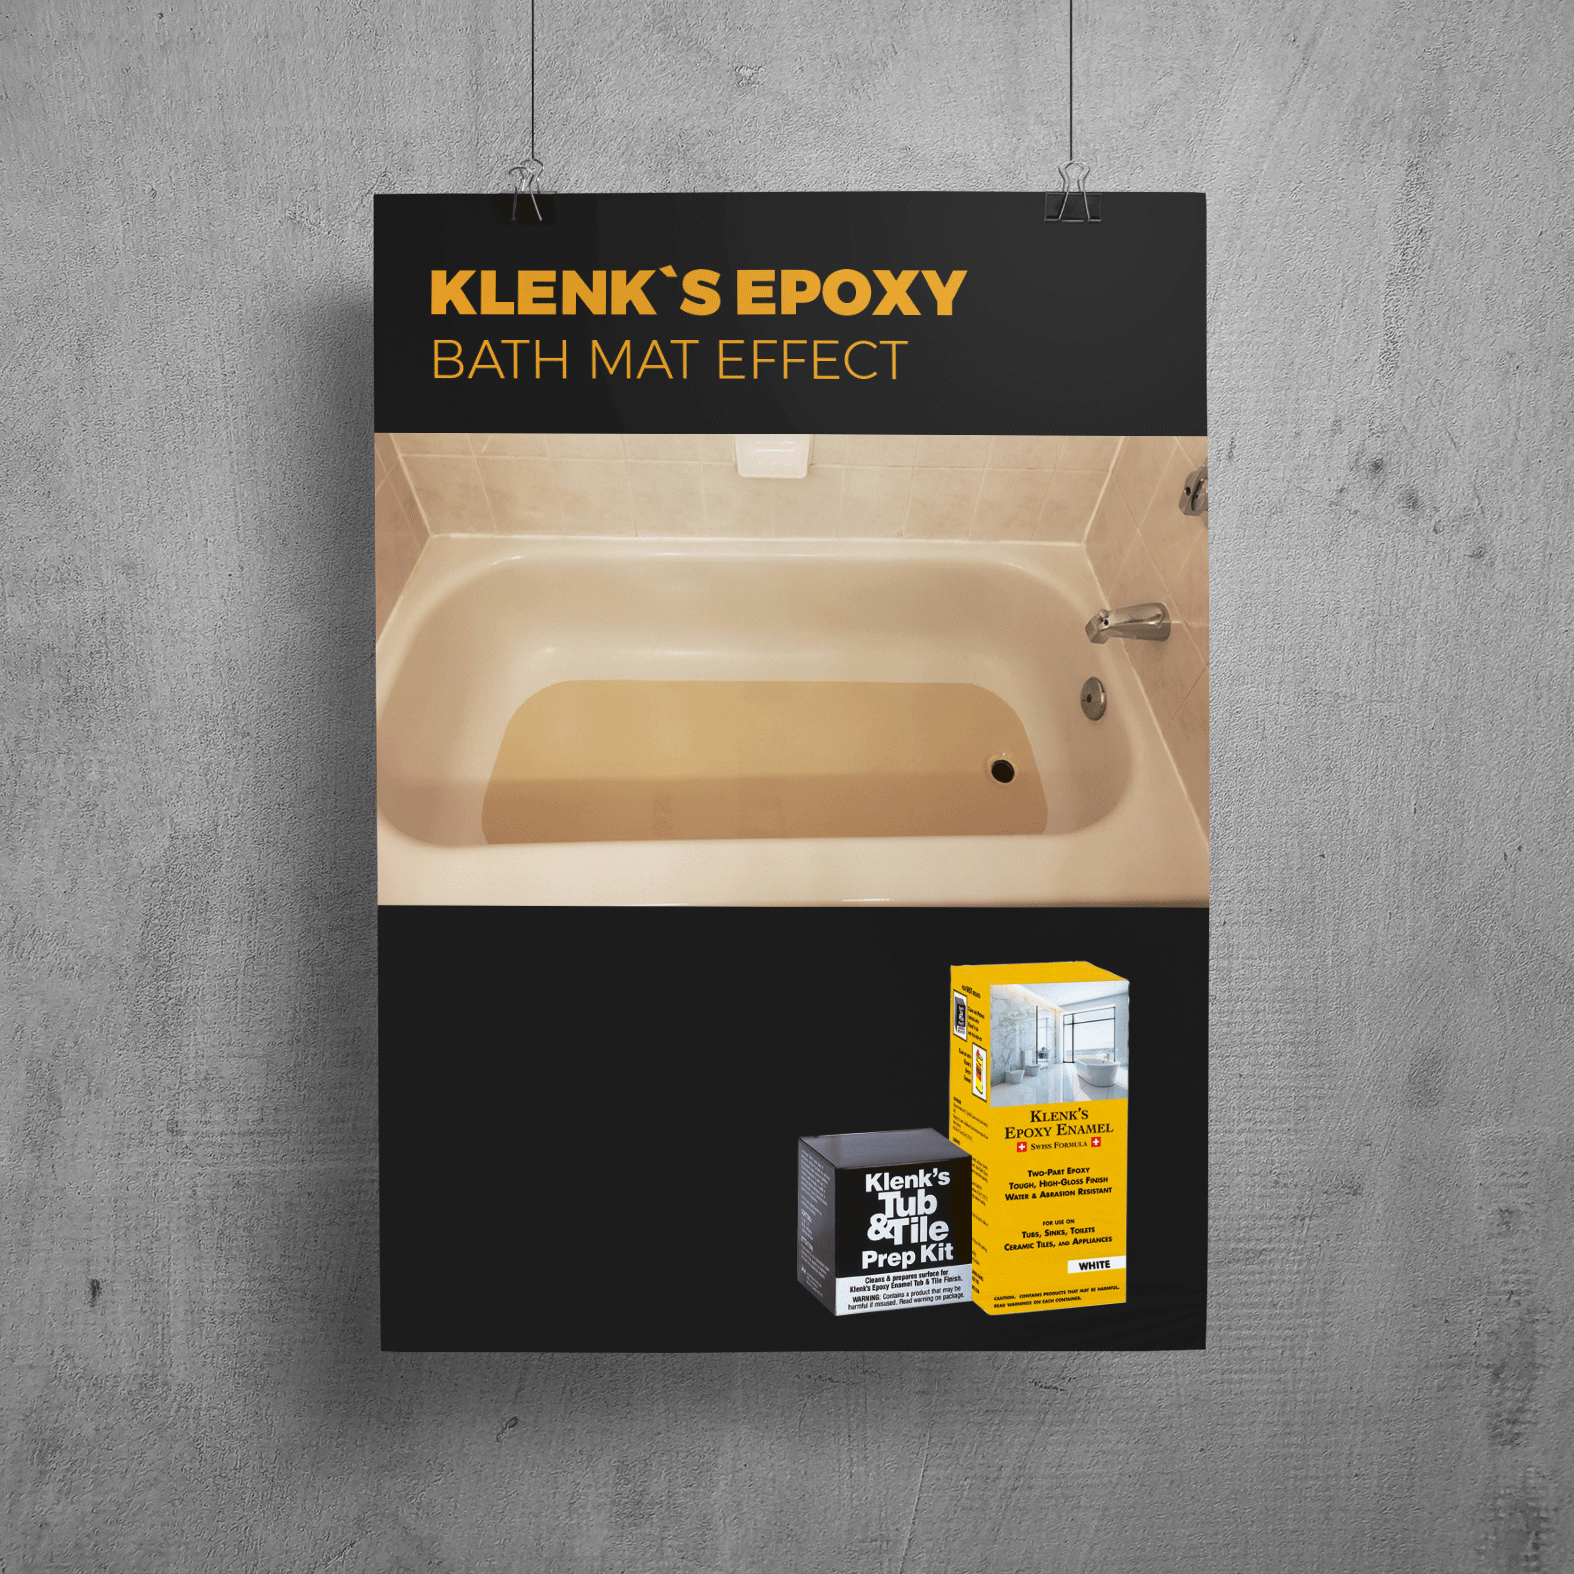 Klenk's Epoxy<br>Bath Mat Effect